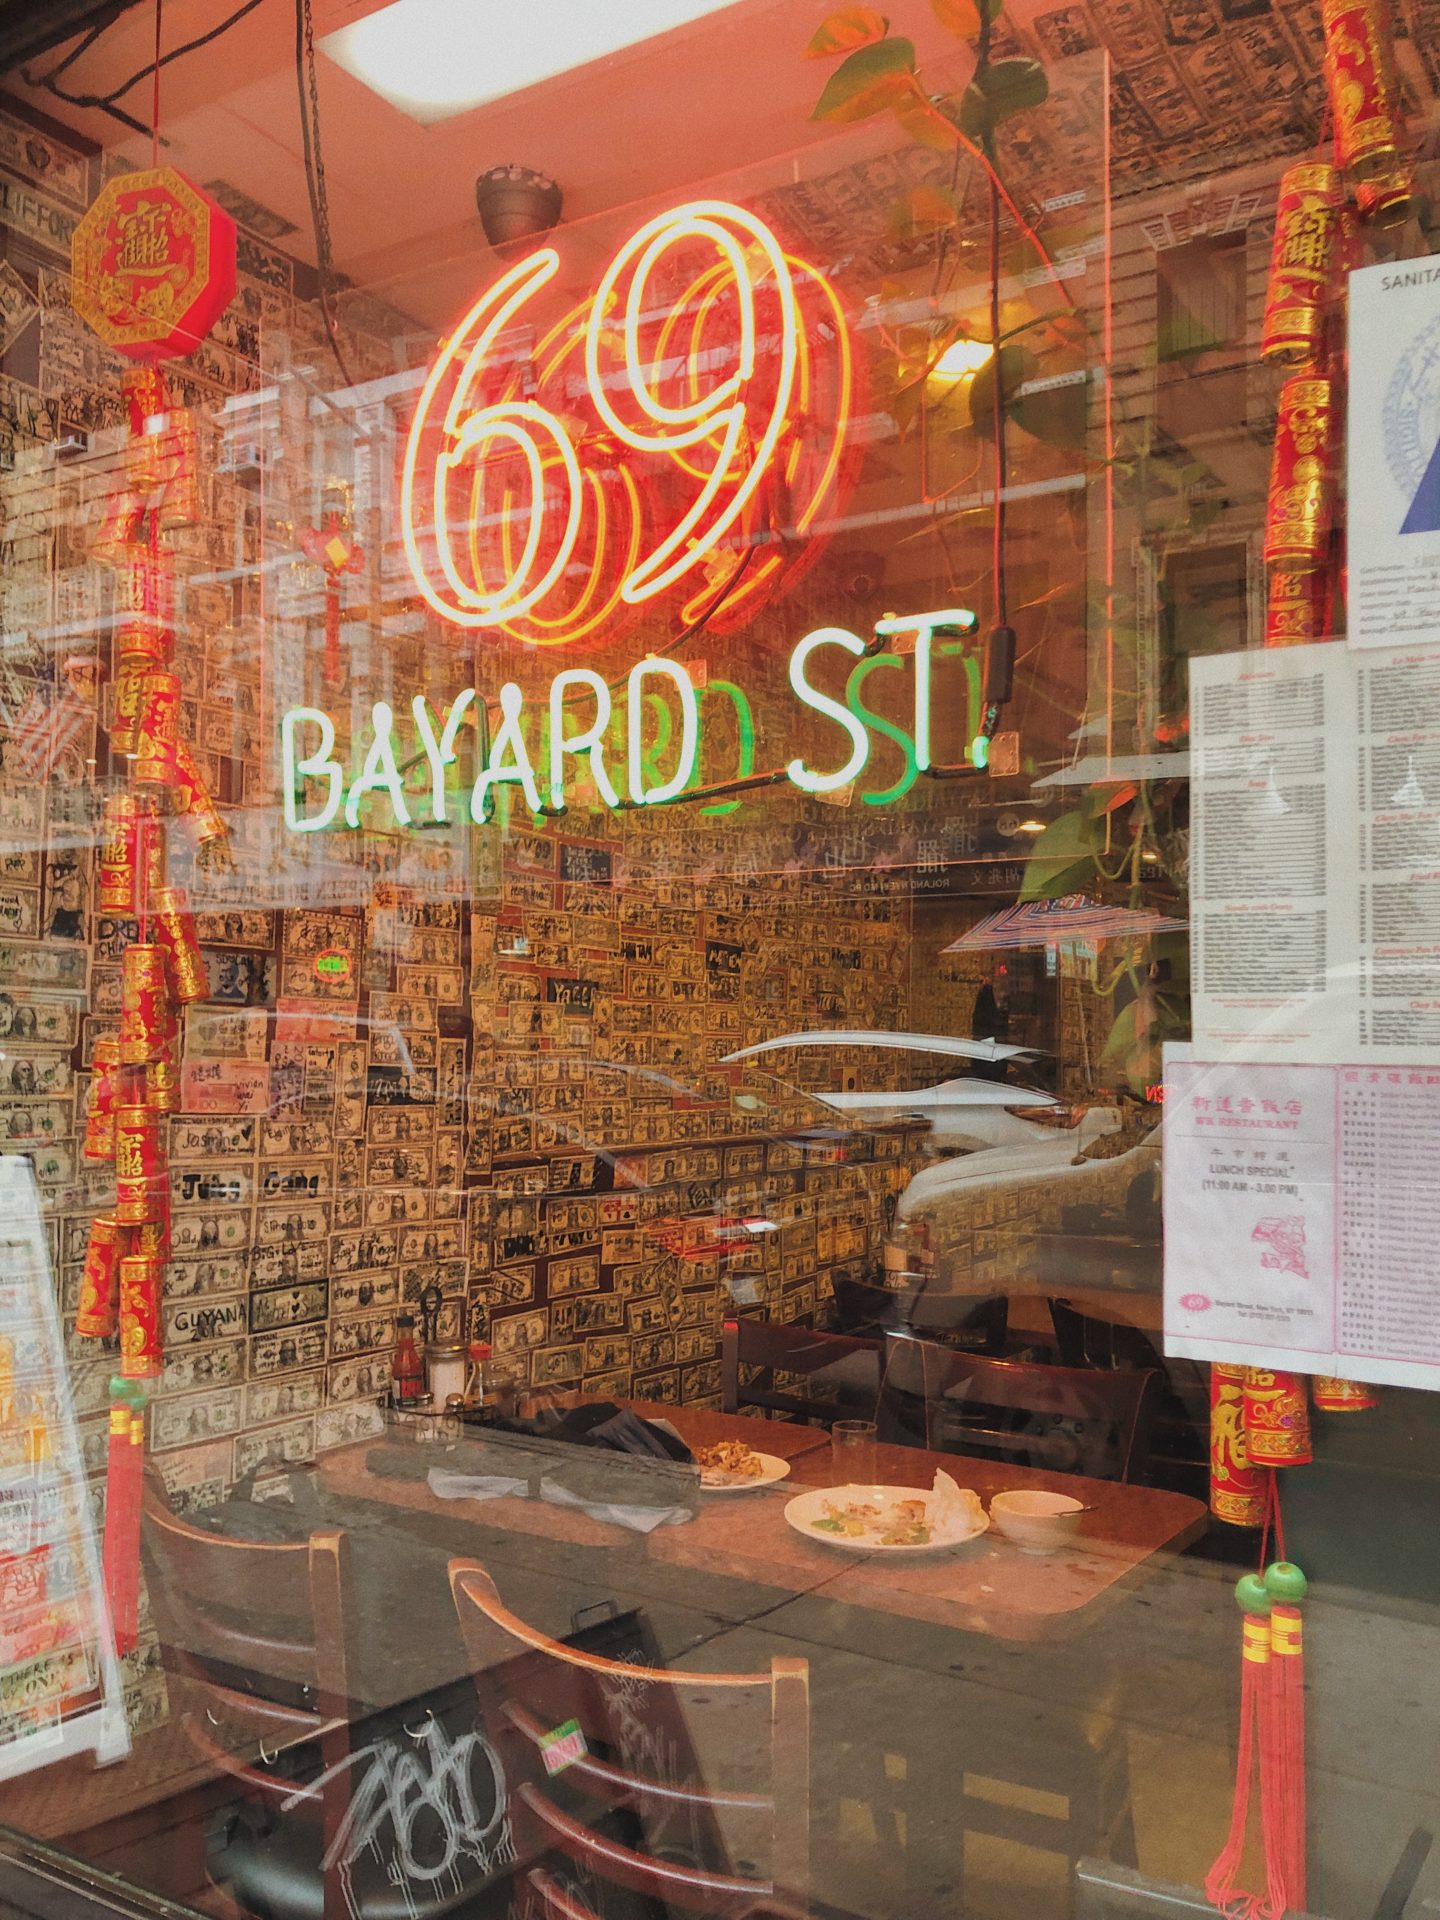 69 Bayard Street in New York City